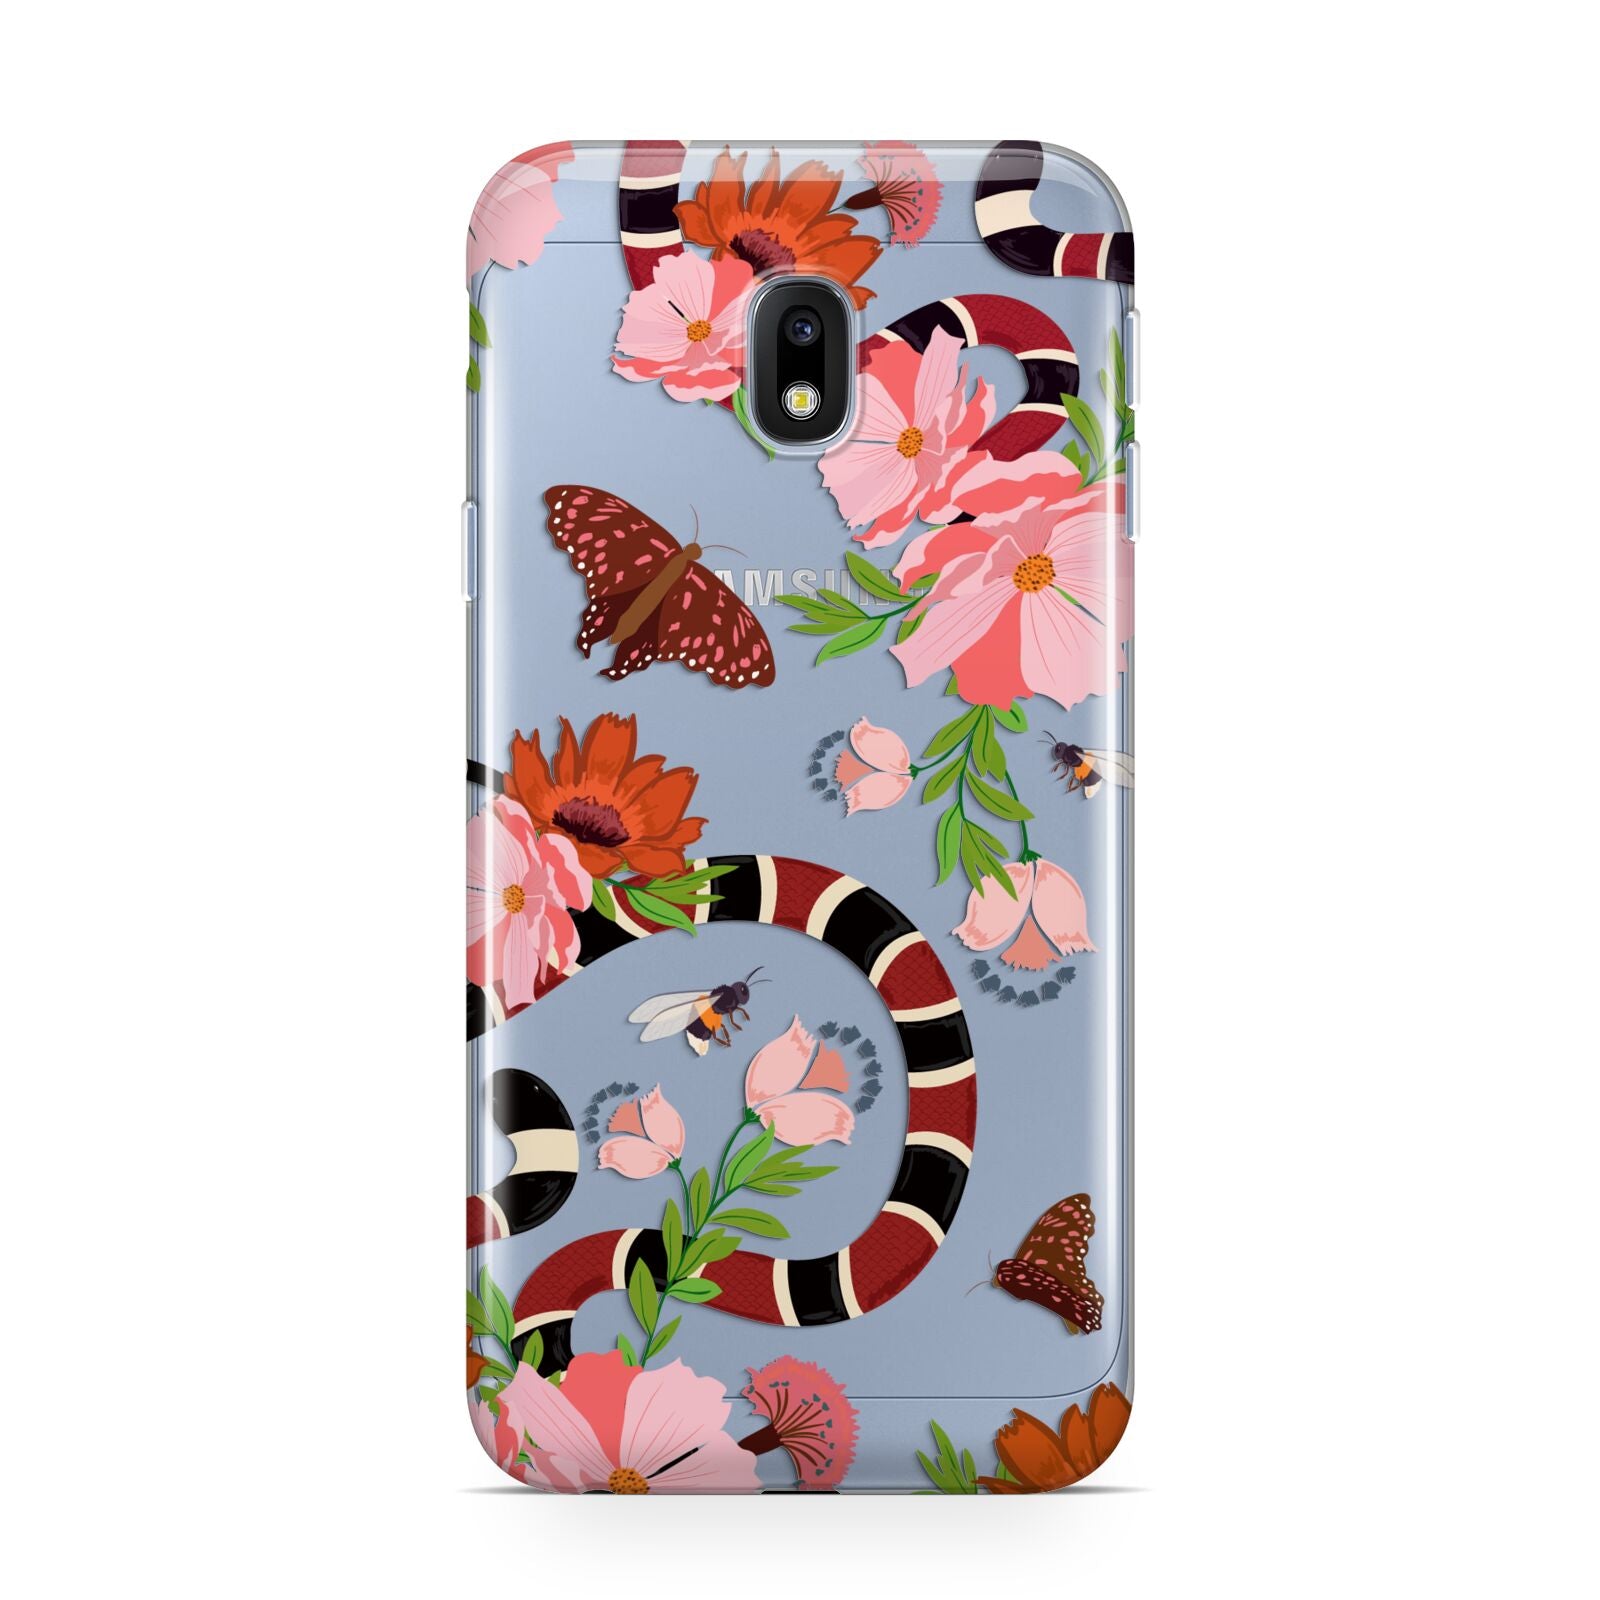 Floral Snake Samsung Galaxy J3 2017 Case